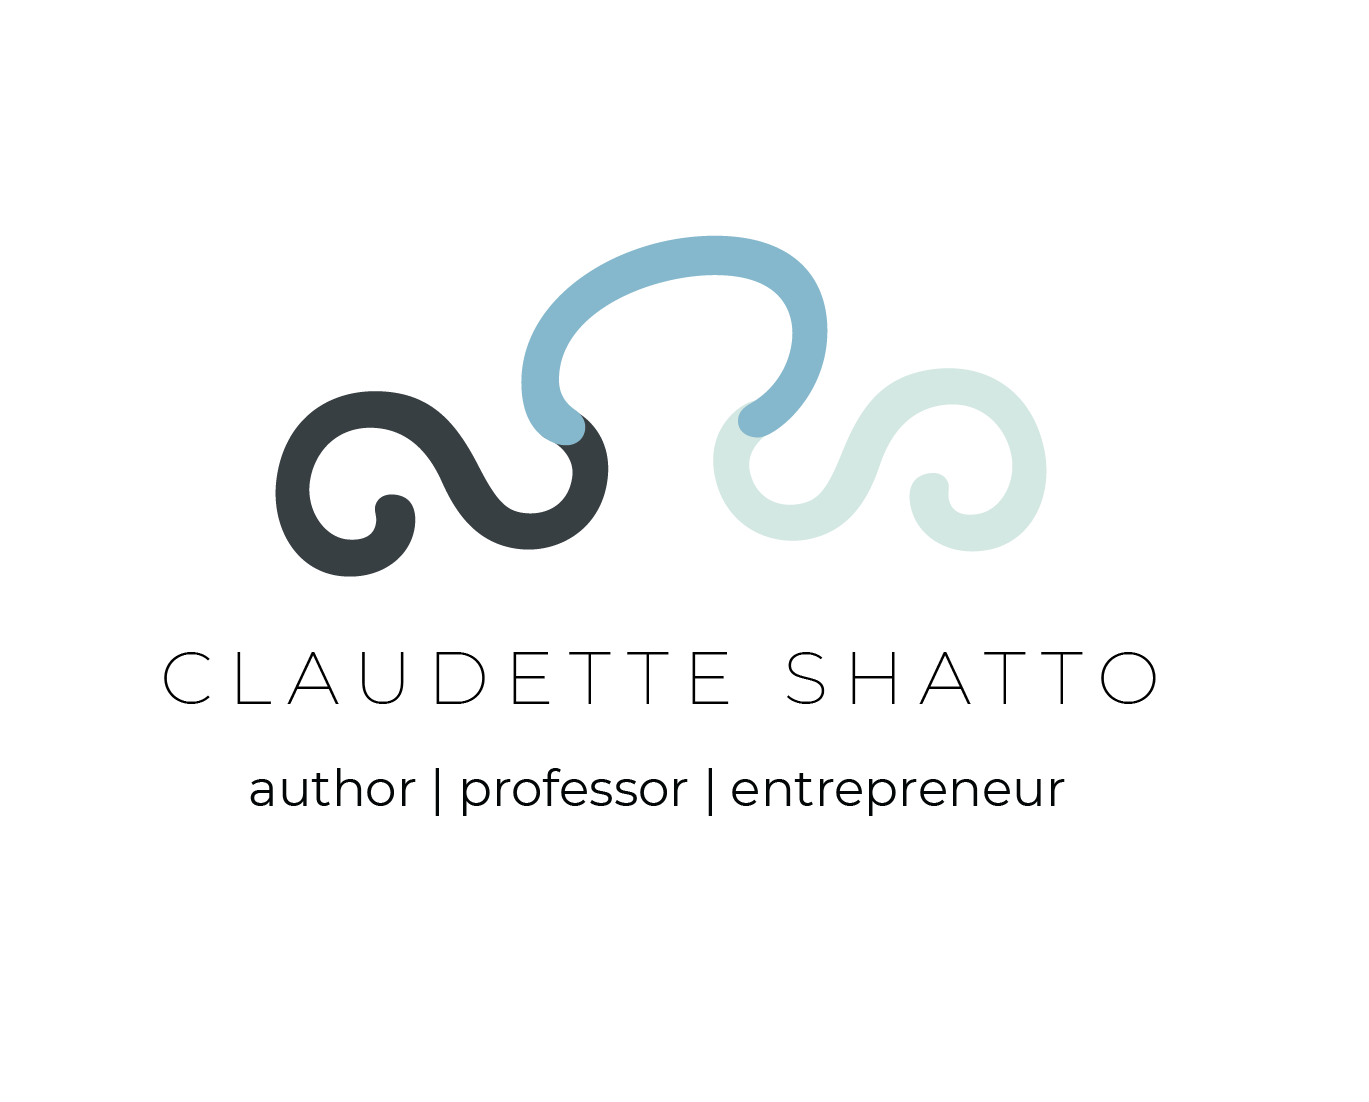 Claudette Shatto | Author | Professor | Entrepreneur